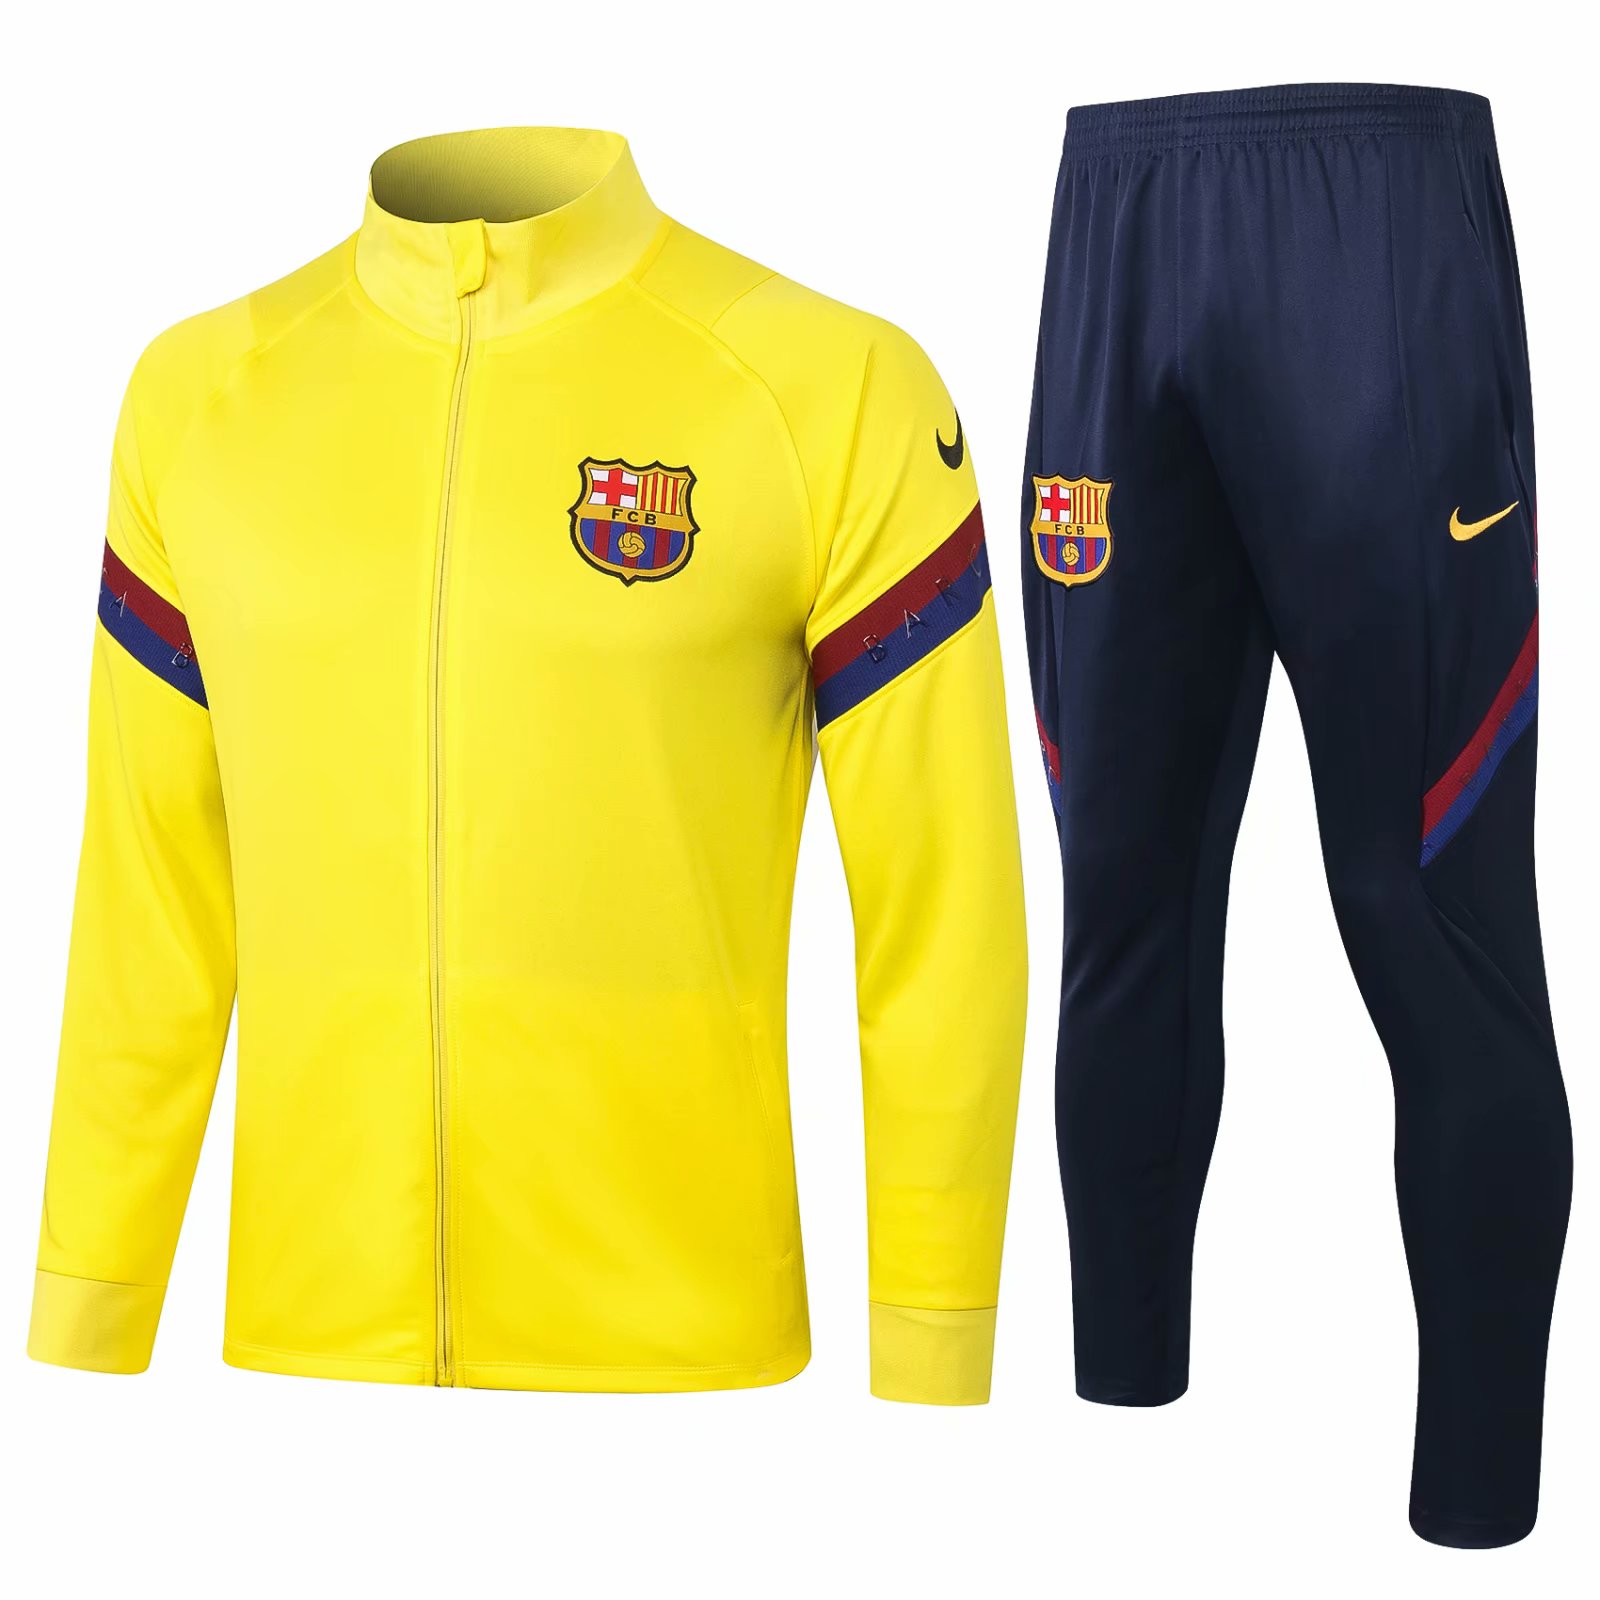 2020-2021 Barcelona Adult kit jacket